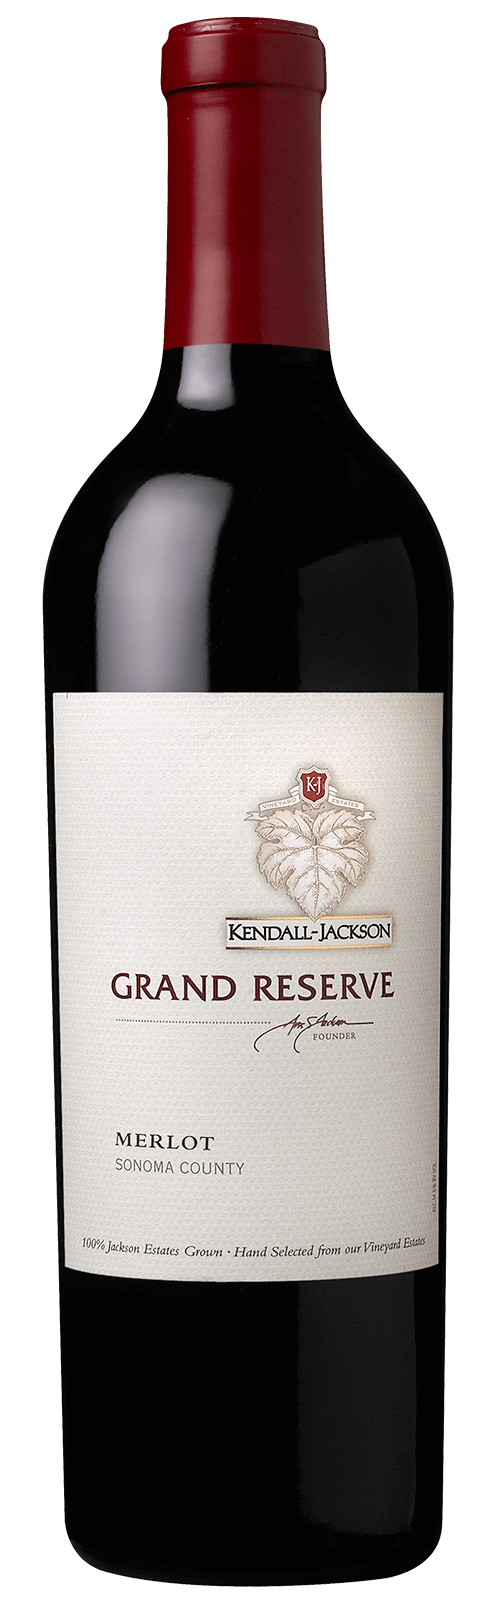 Kendall-Jackson Grand Reserve Merlot